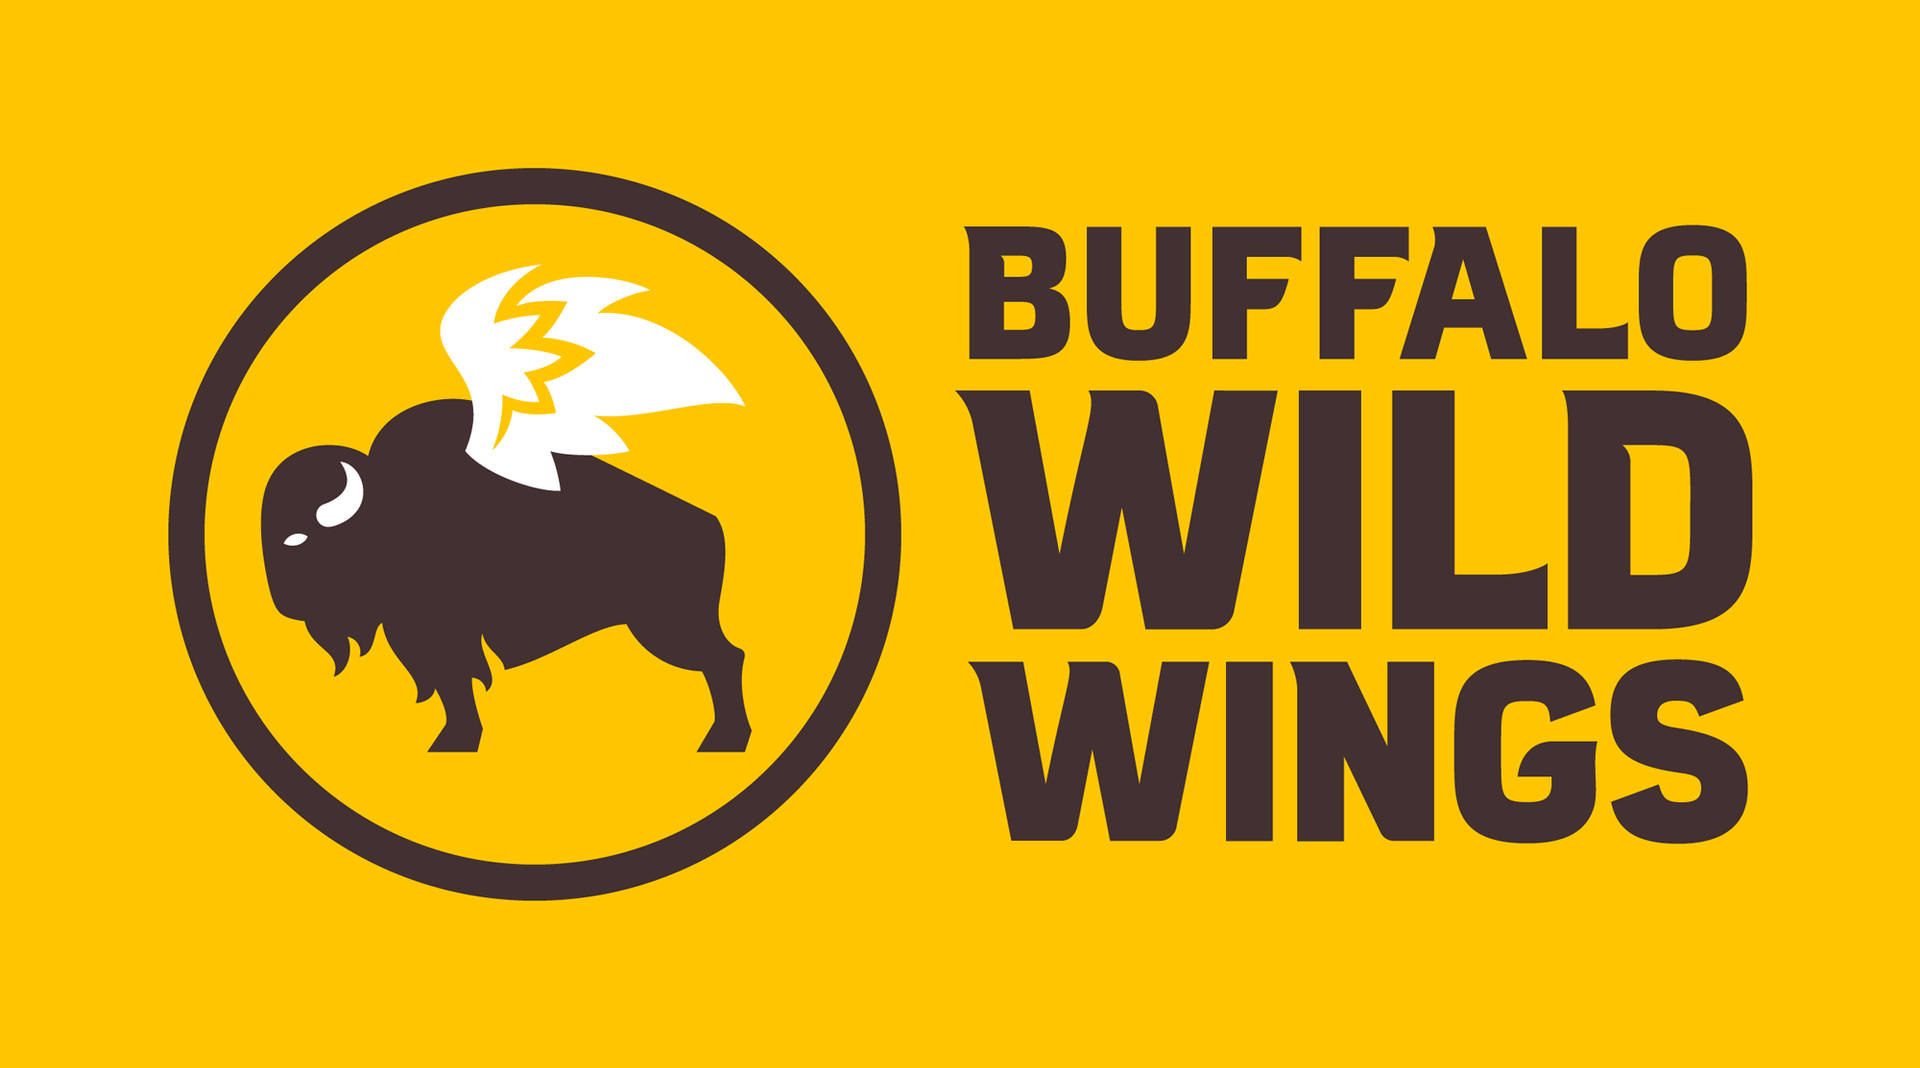 Buffalo Wild Wings Yellow Poster Background